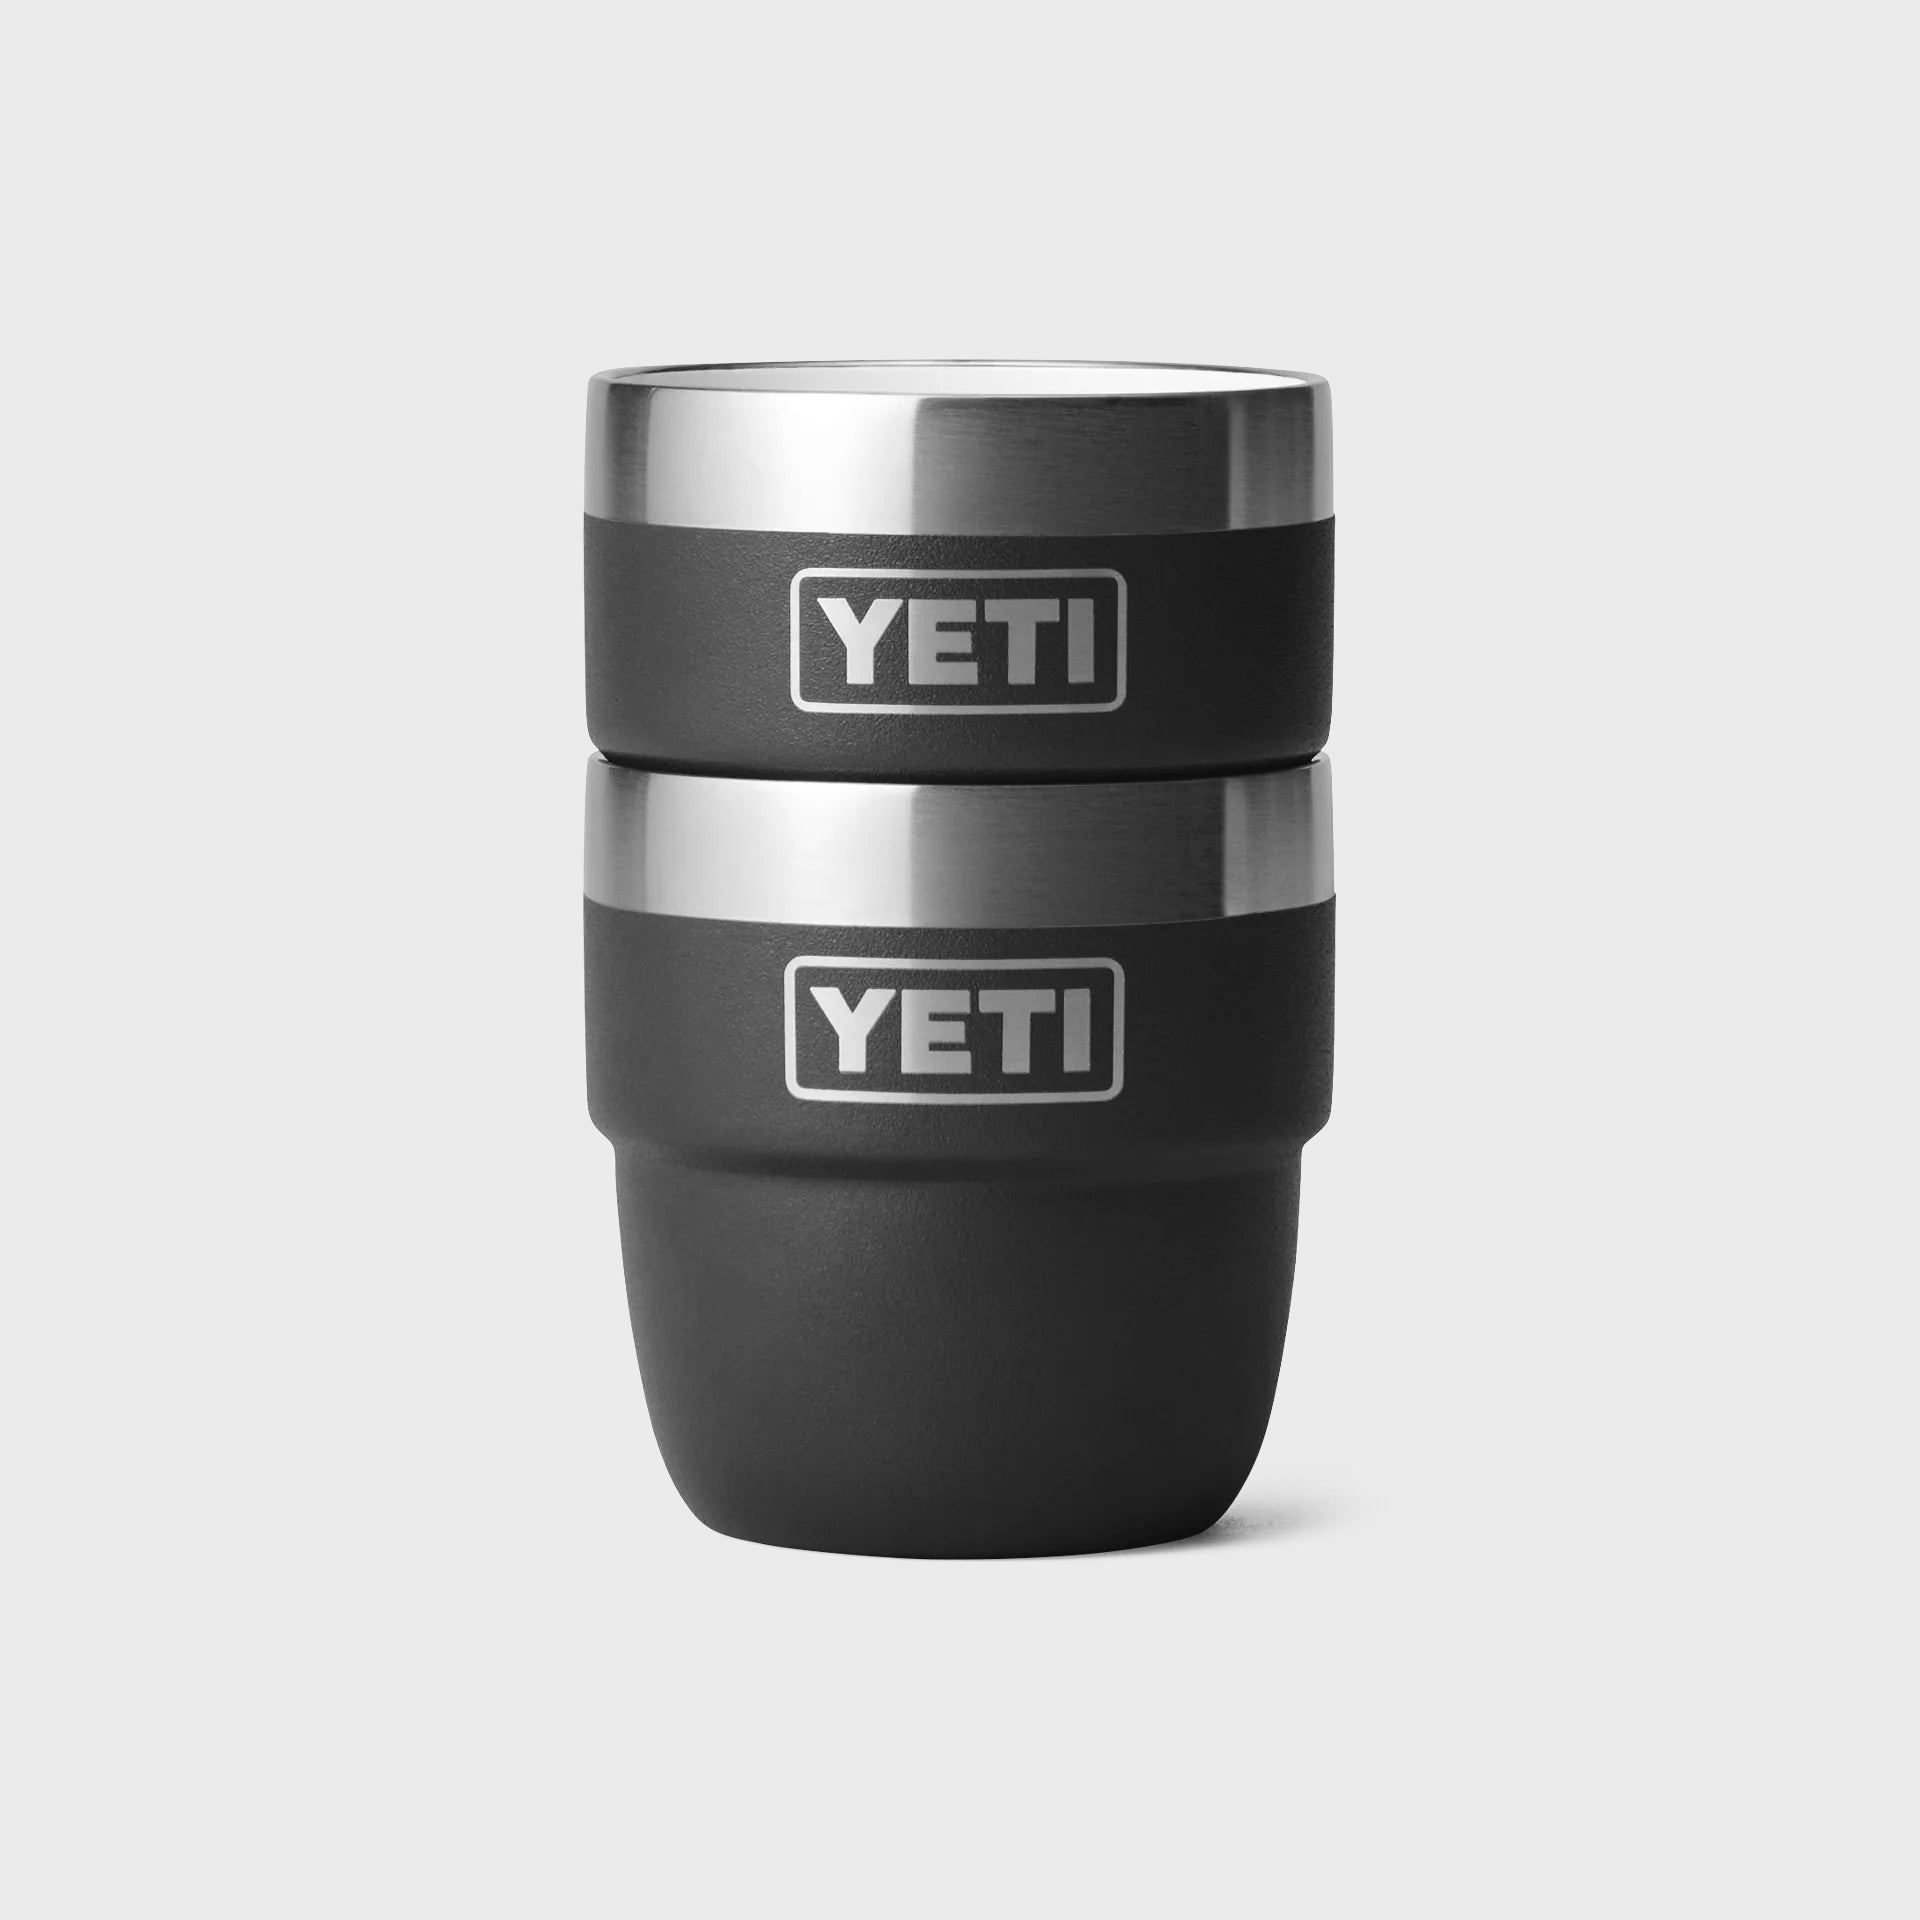 Yeti Rambler 4 oz Stackable Espresso Cups (2 Pack) - Black - ManGo Surfing